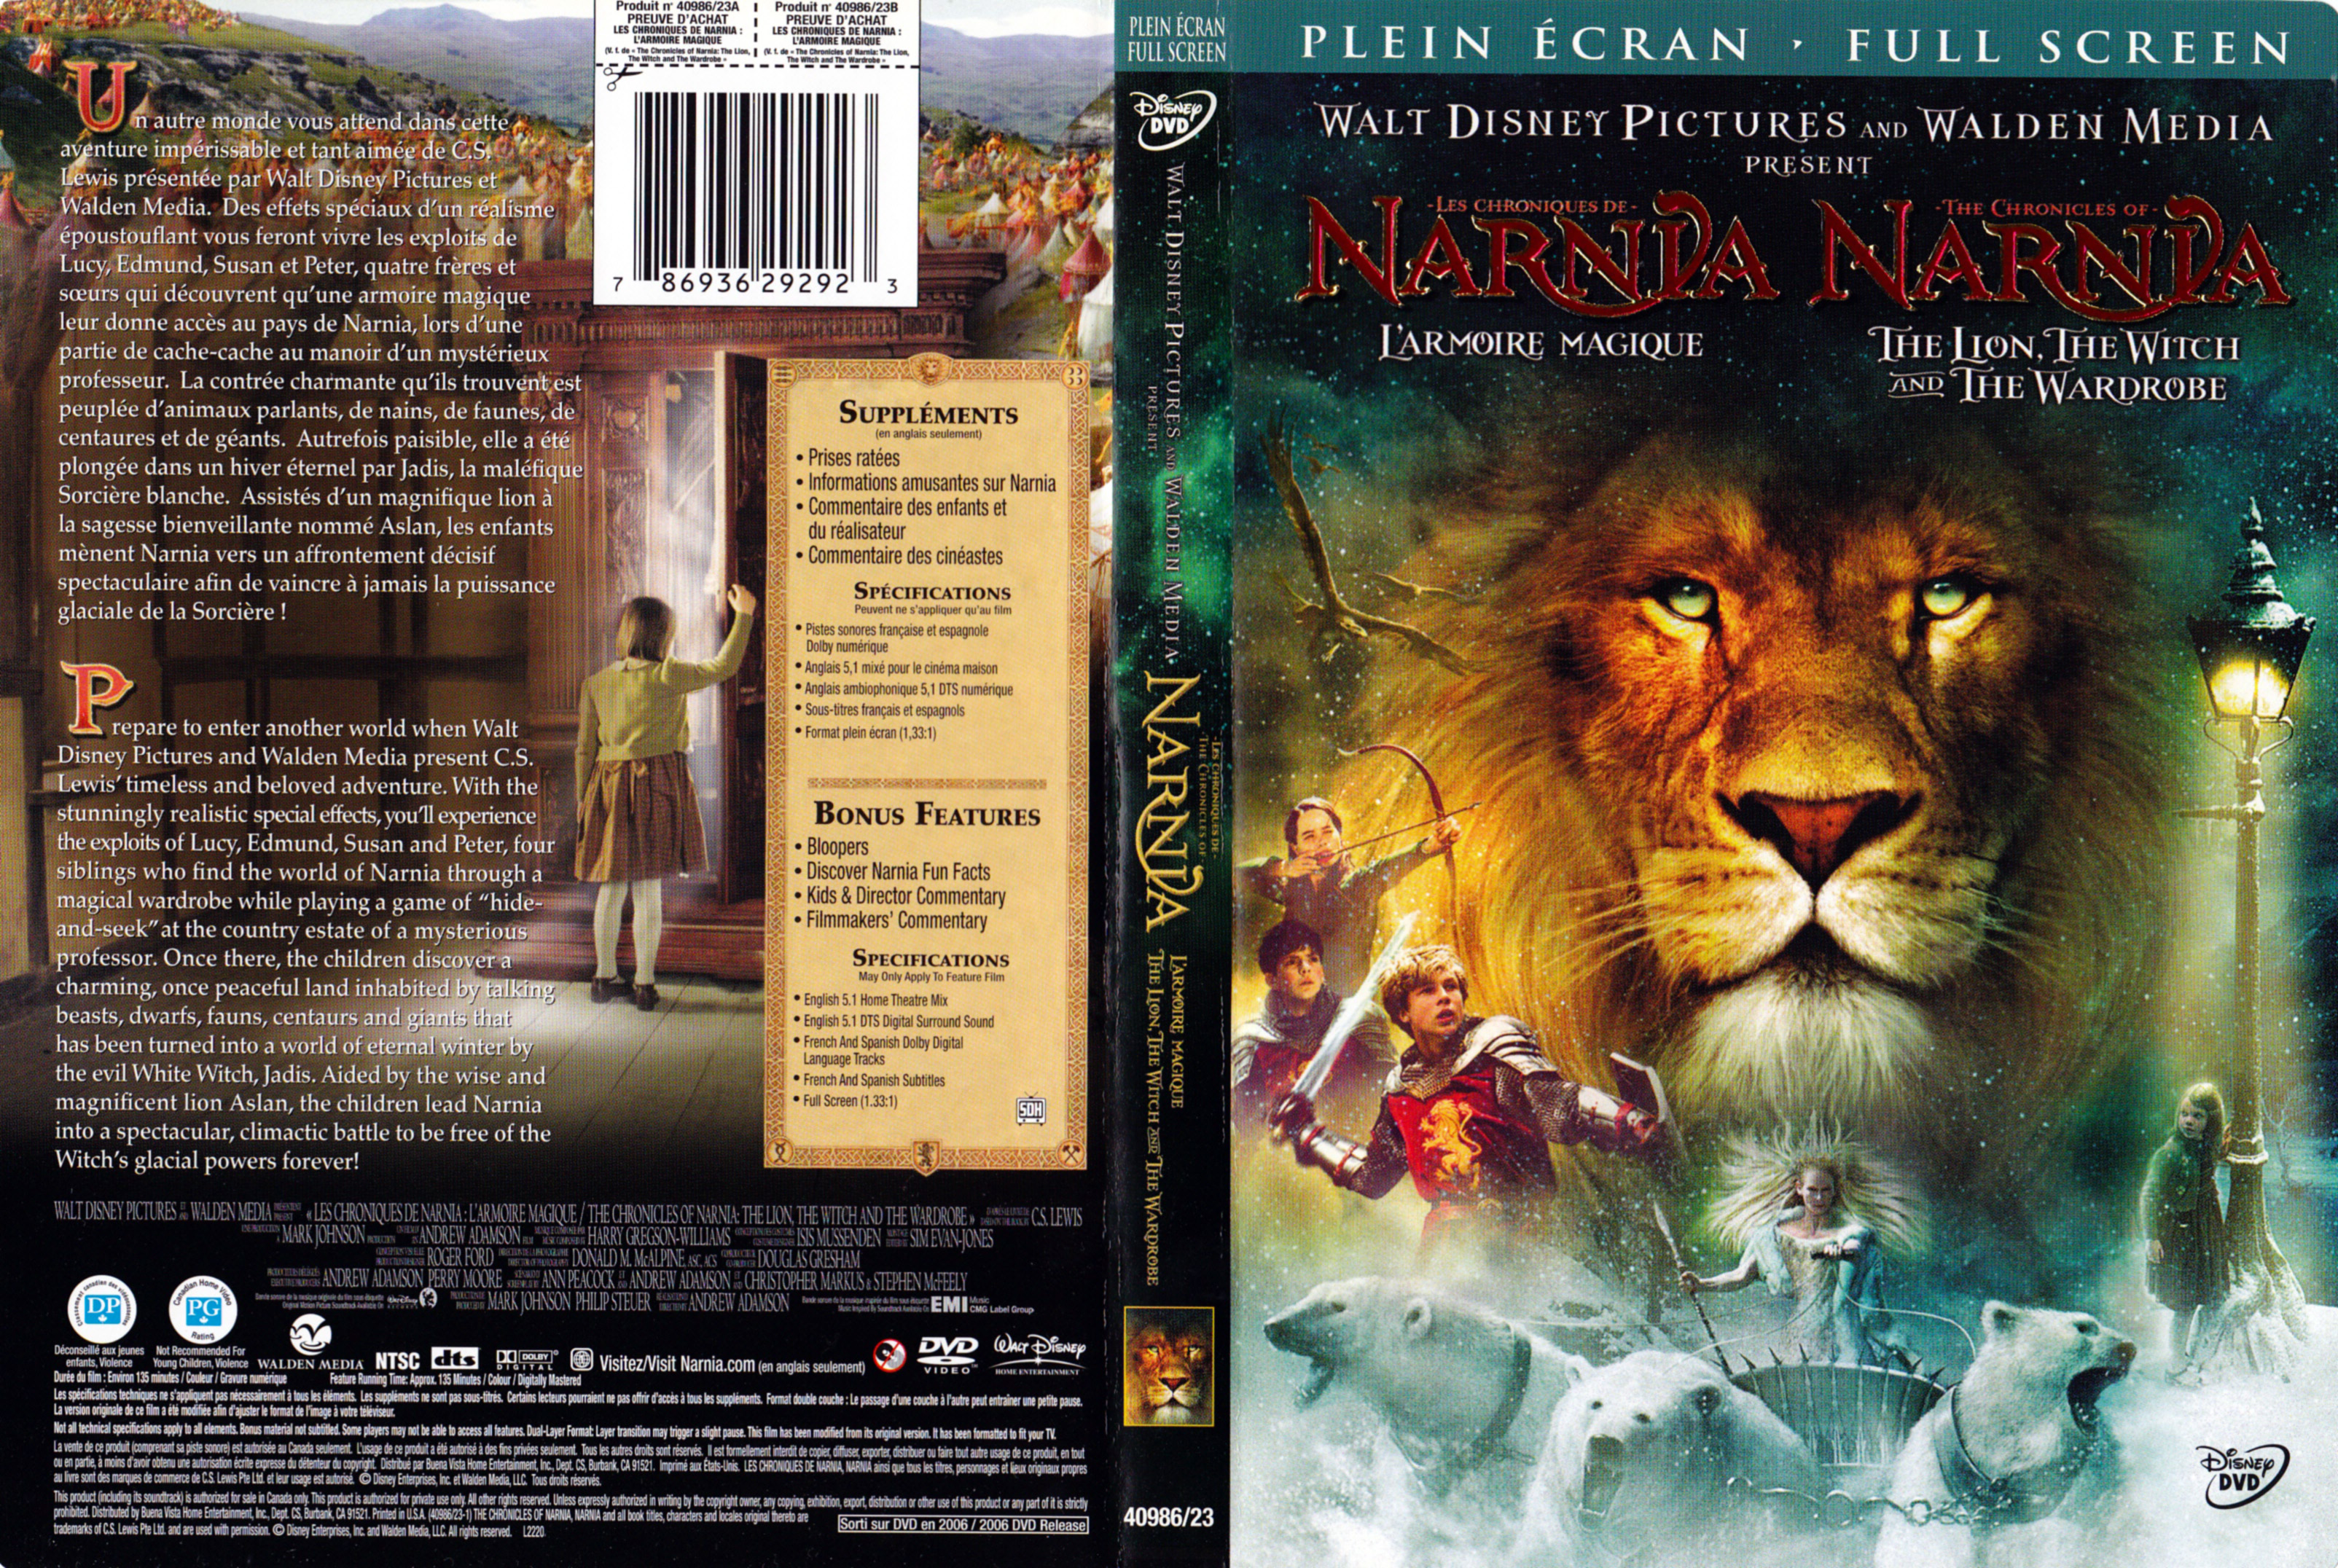 Jaquette DVD Les chroniques de Narnia l